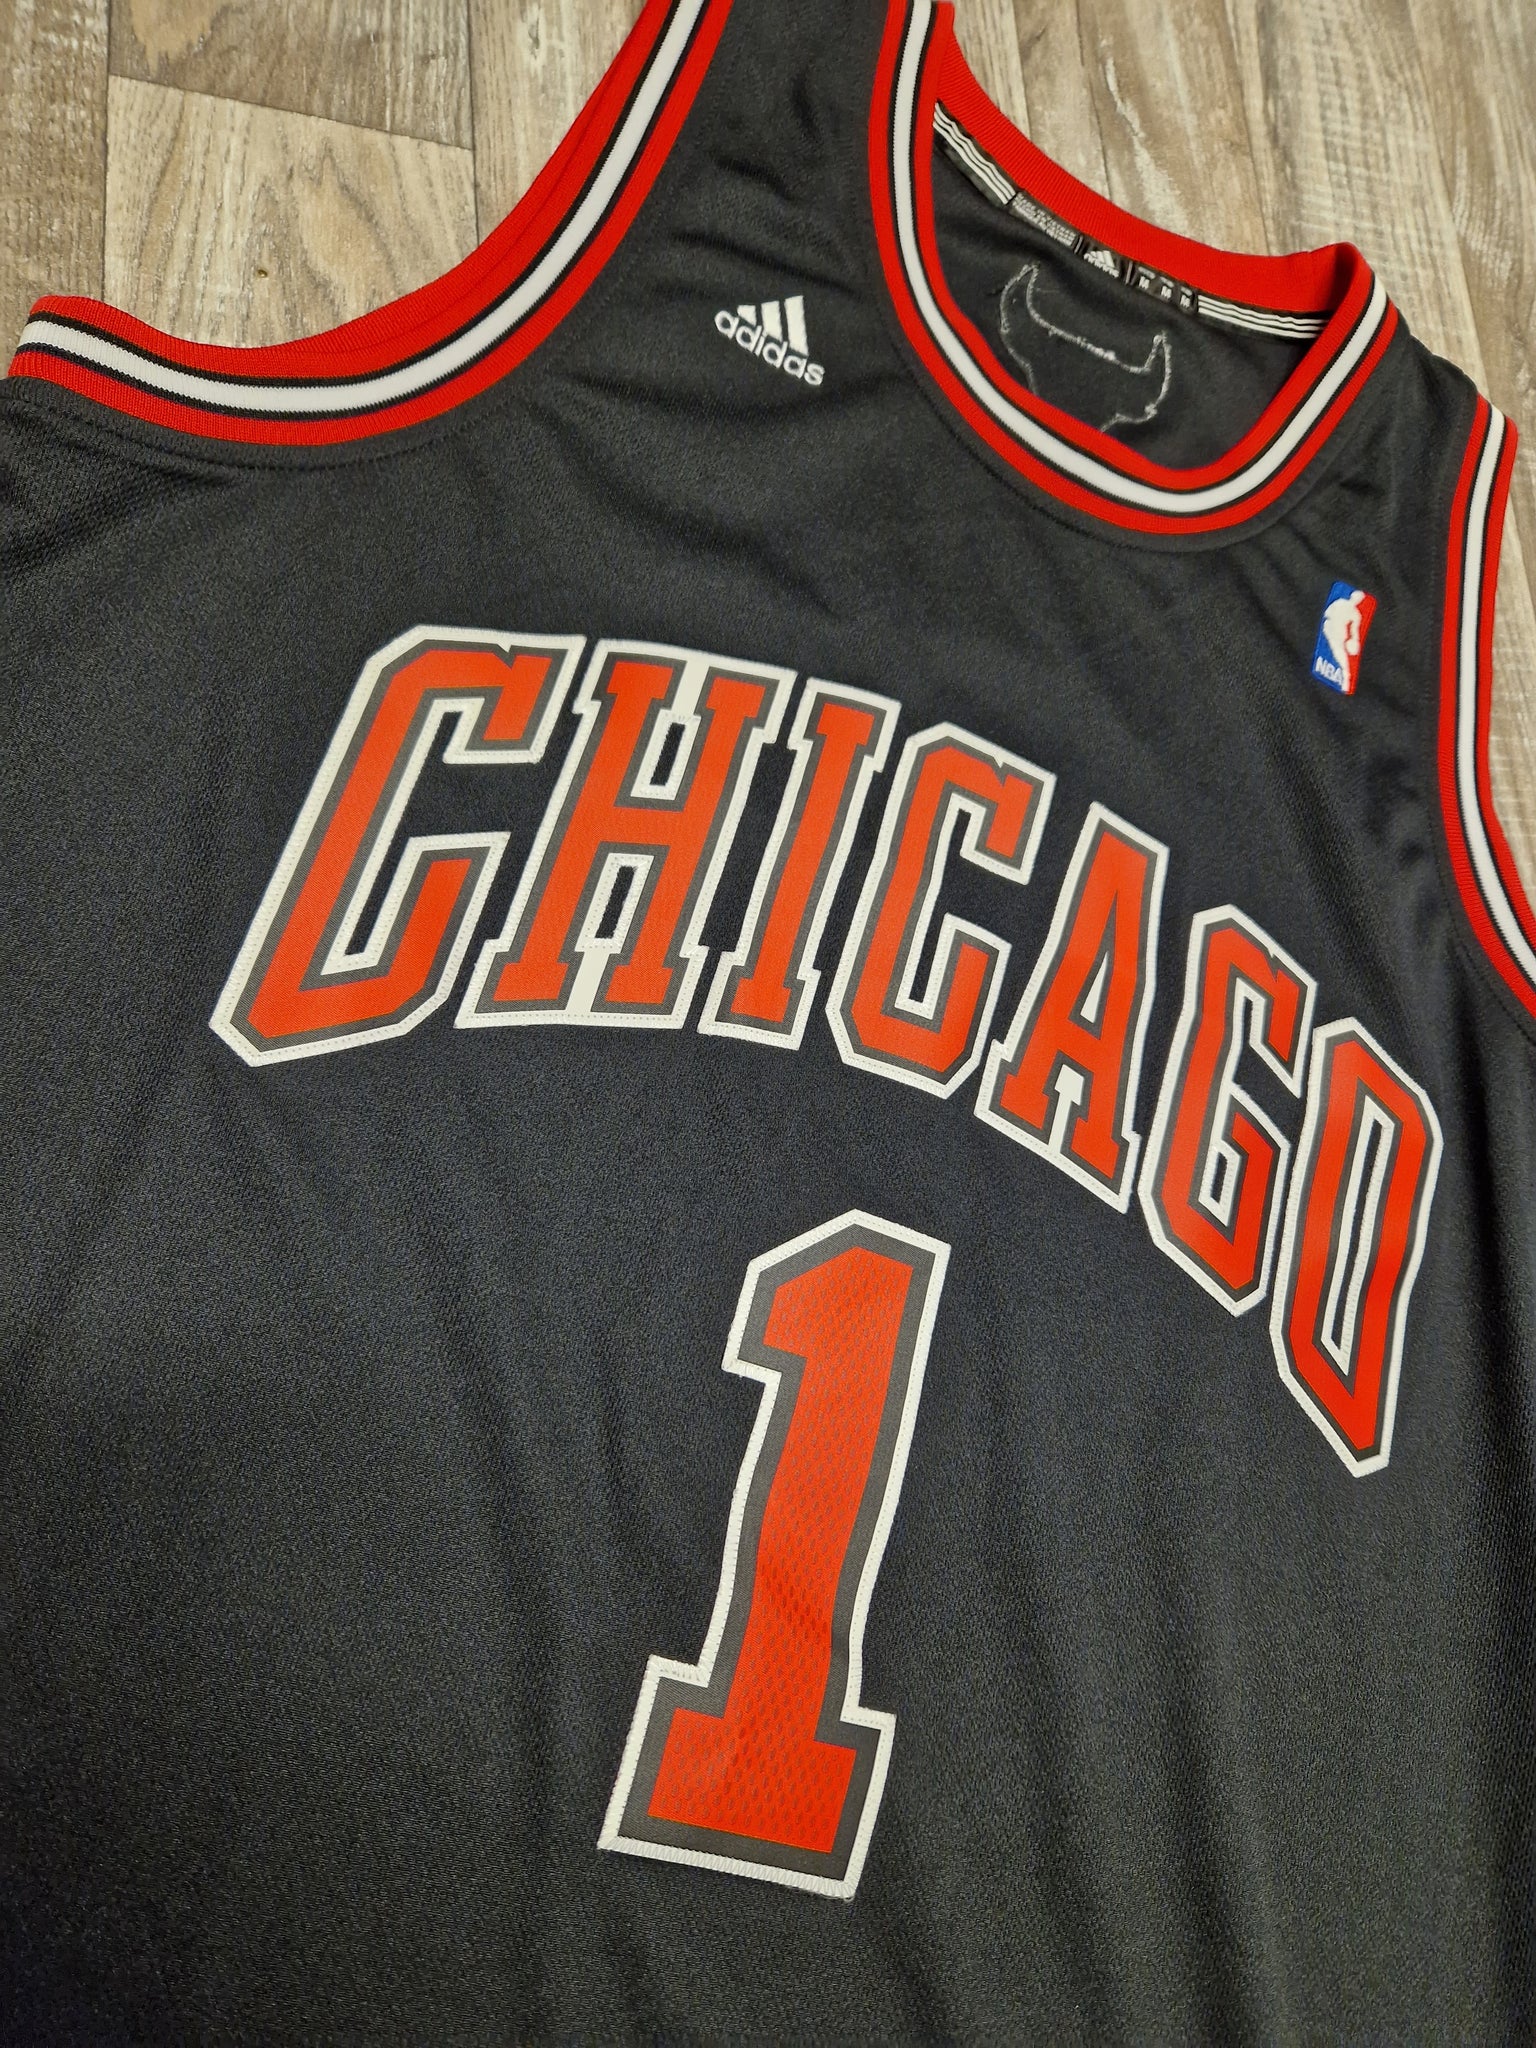 Chicago Bulls Derrick Rose Jersey Adidas Authentic NBA Sz M 